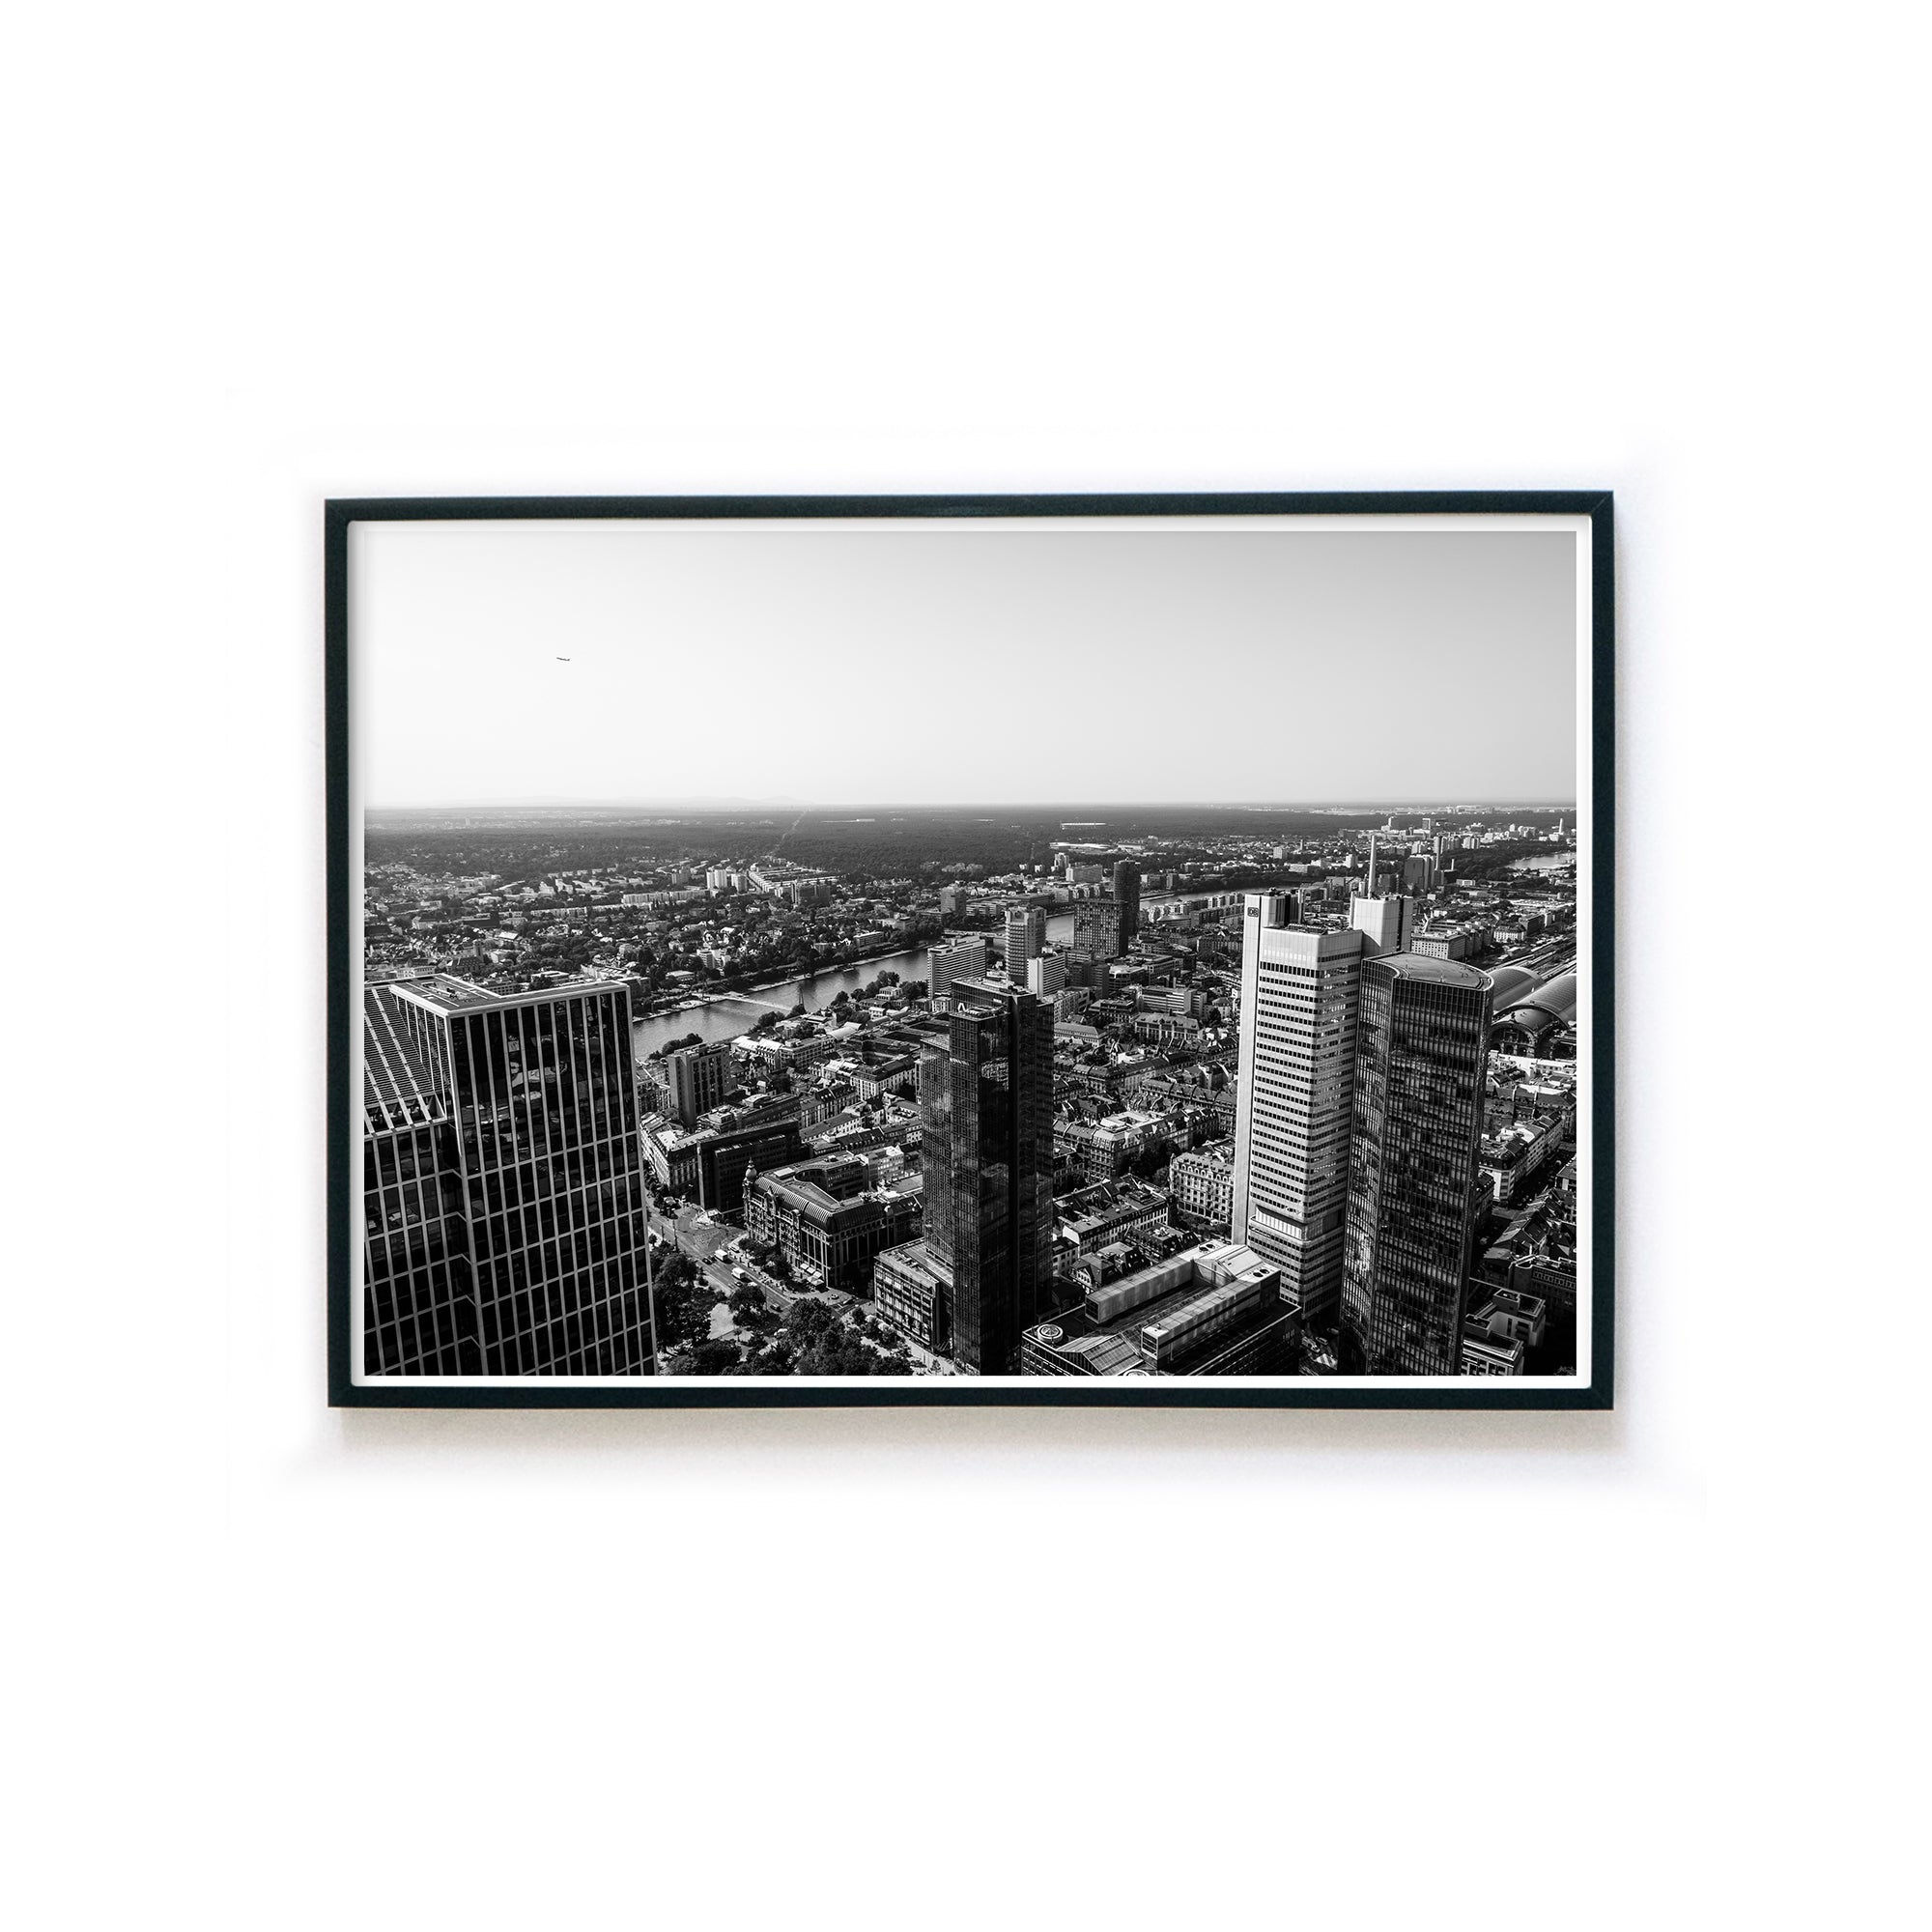 4one-pictures-frankfurt-am-main-poster-skyline-bild-ffm-kunstdruck-shop-rahmen-5mm_9fab9d0c-989f-47ea-b6da-954d6a02e86e.jpg